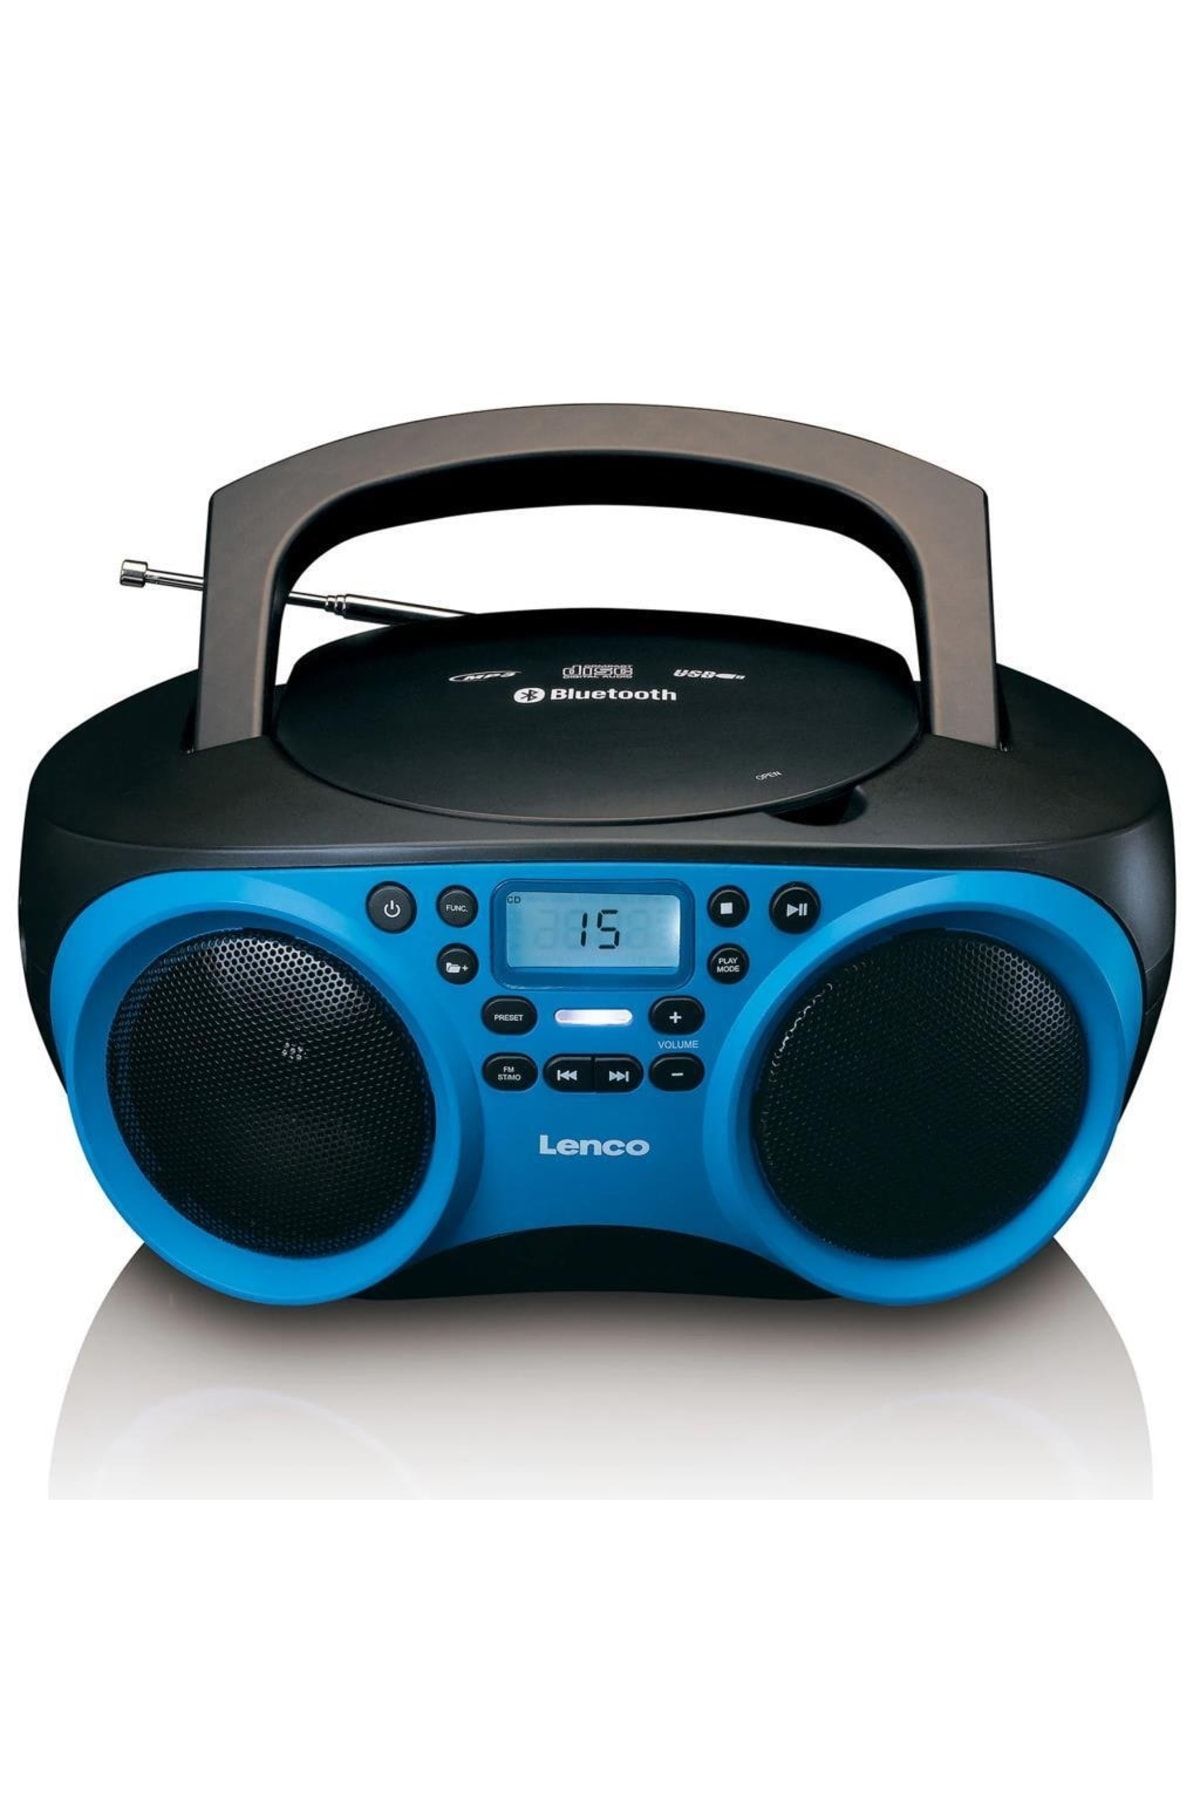 Lenco Scd-501 Mavi Taşınabilir Müzik Seti Fm Radyo Bluetooth Özellikli Cd-usb Oynatıcı - Mavi